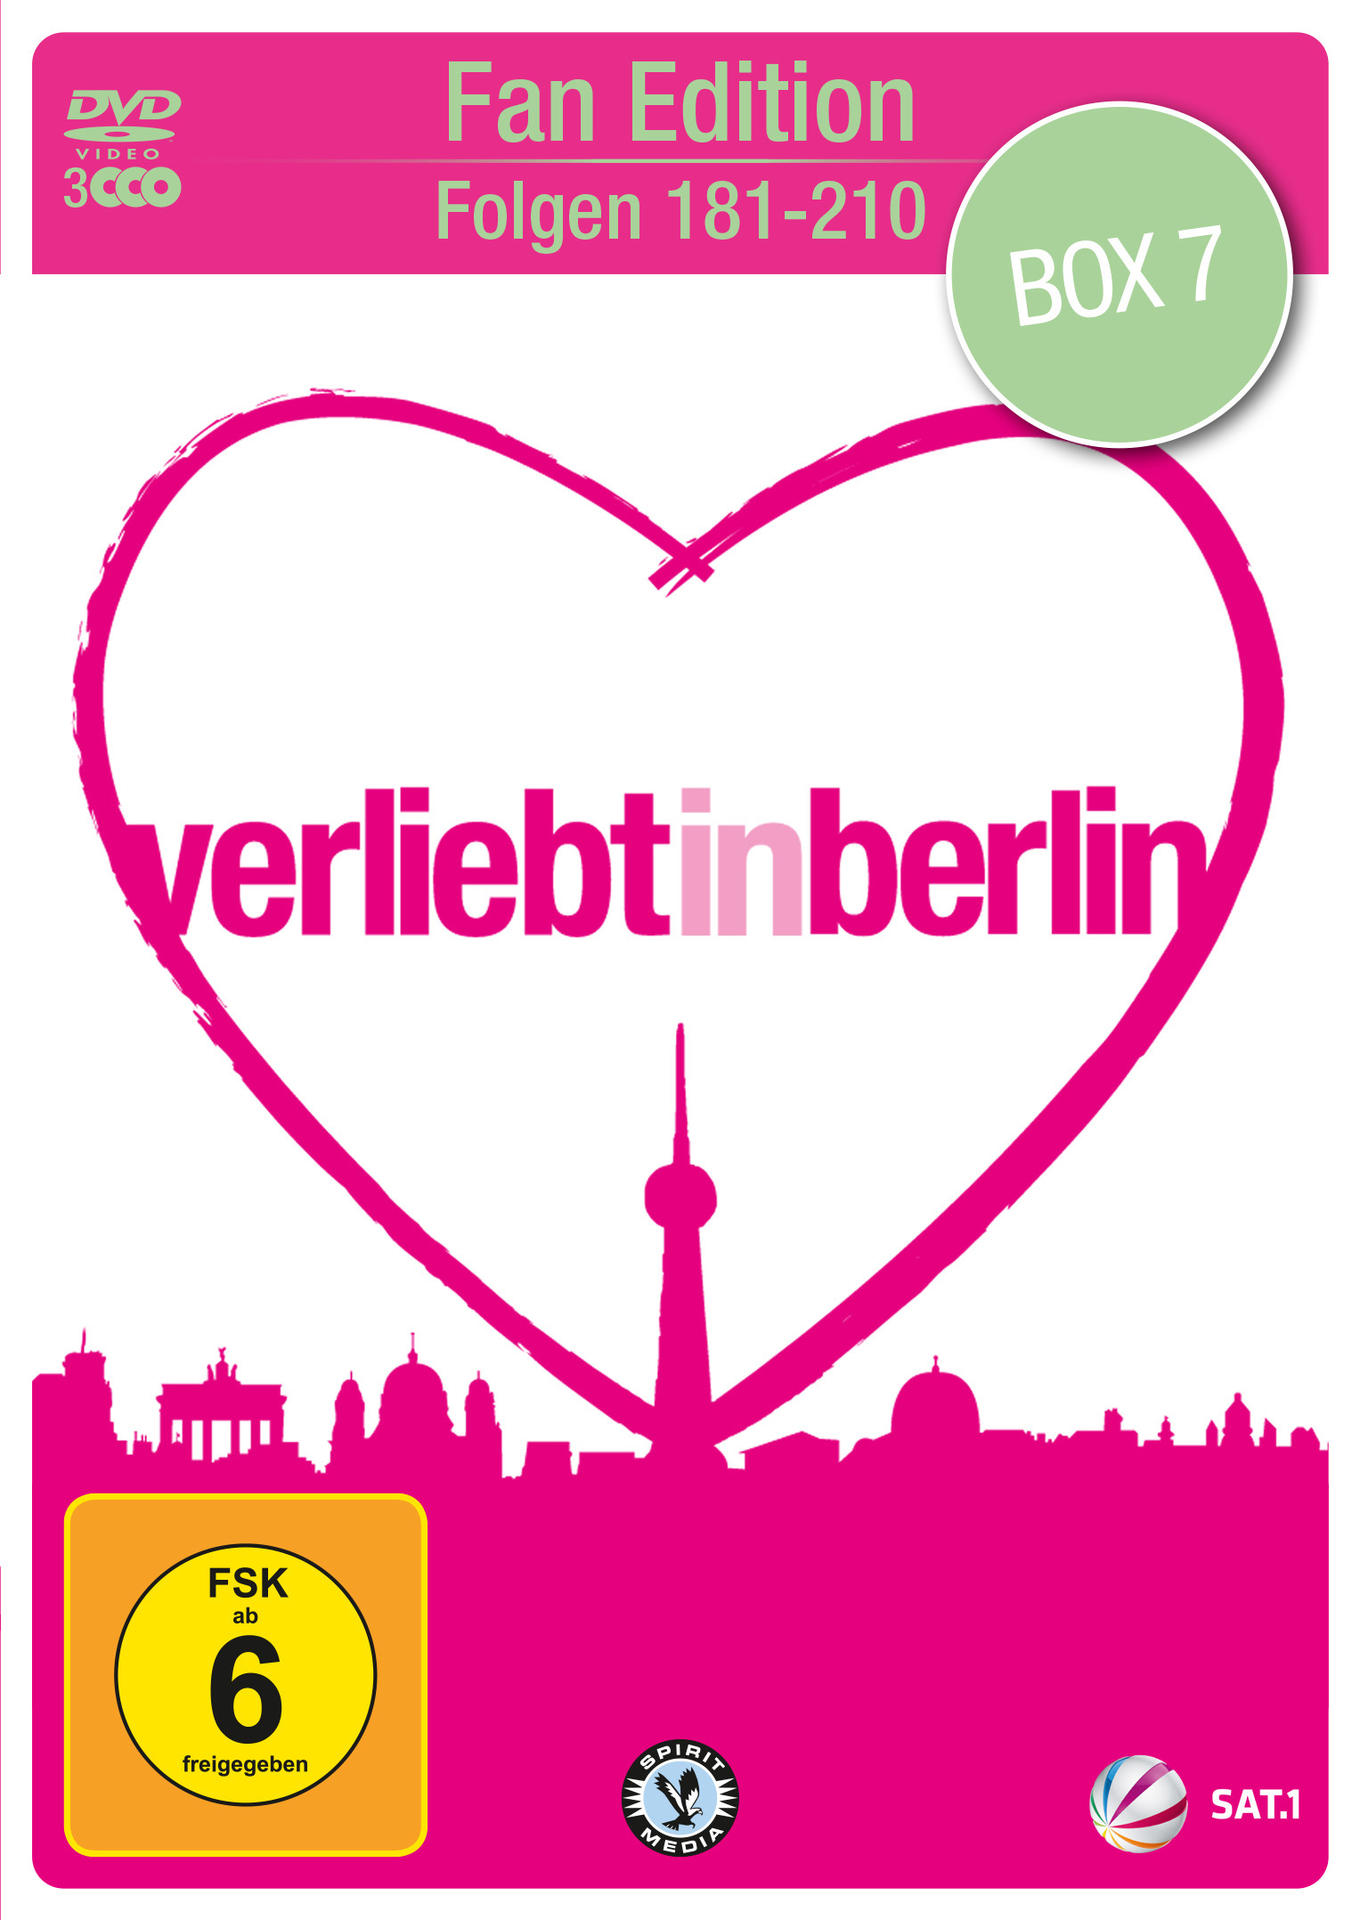 Verliebt In Berlin - DVD 181-210 Folgen Box - 7